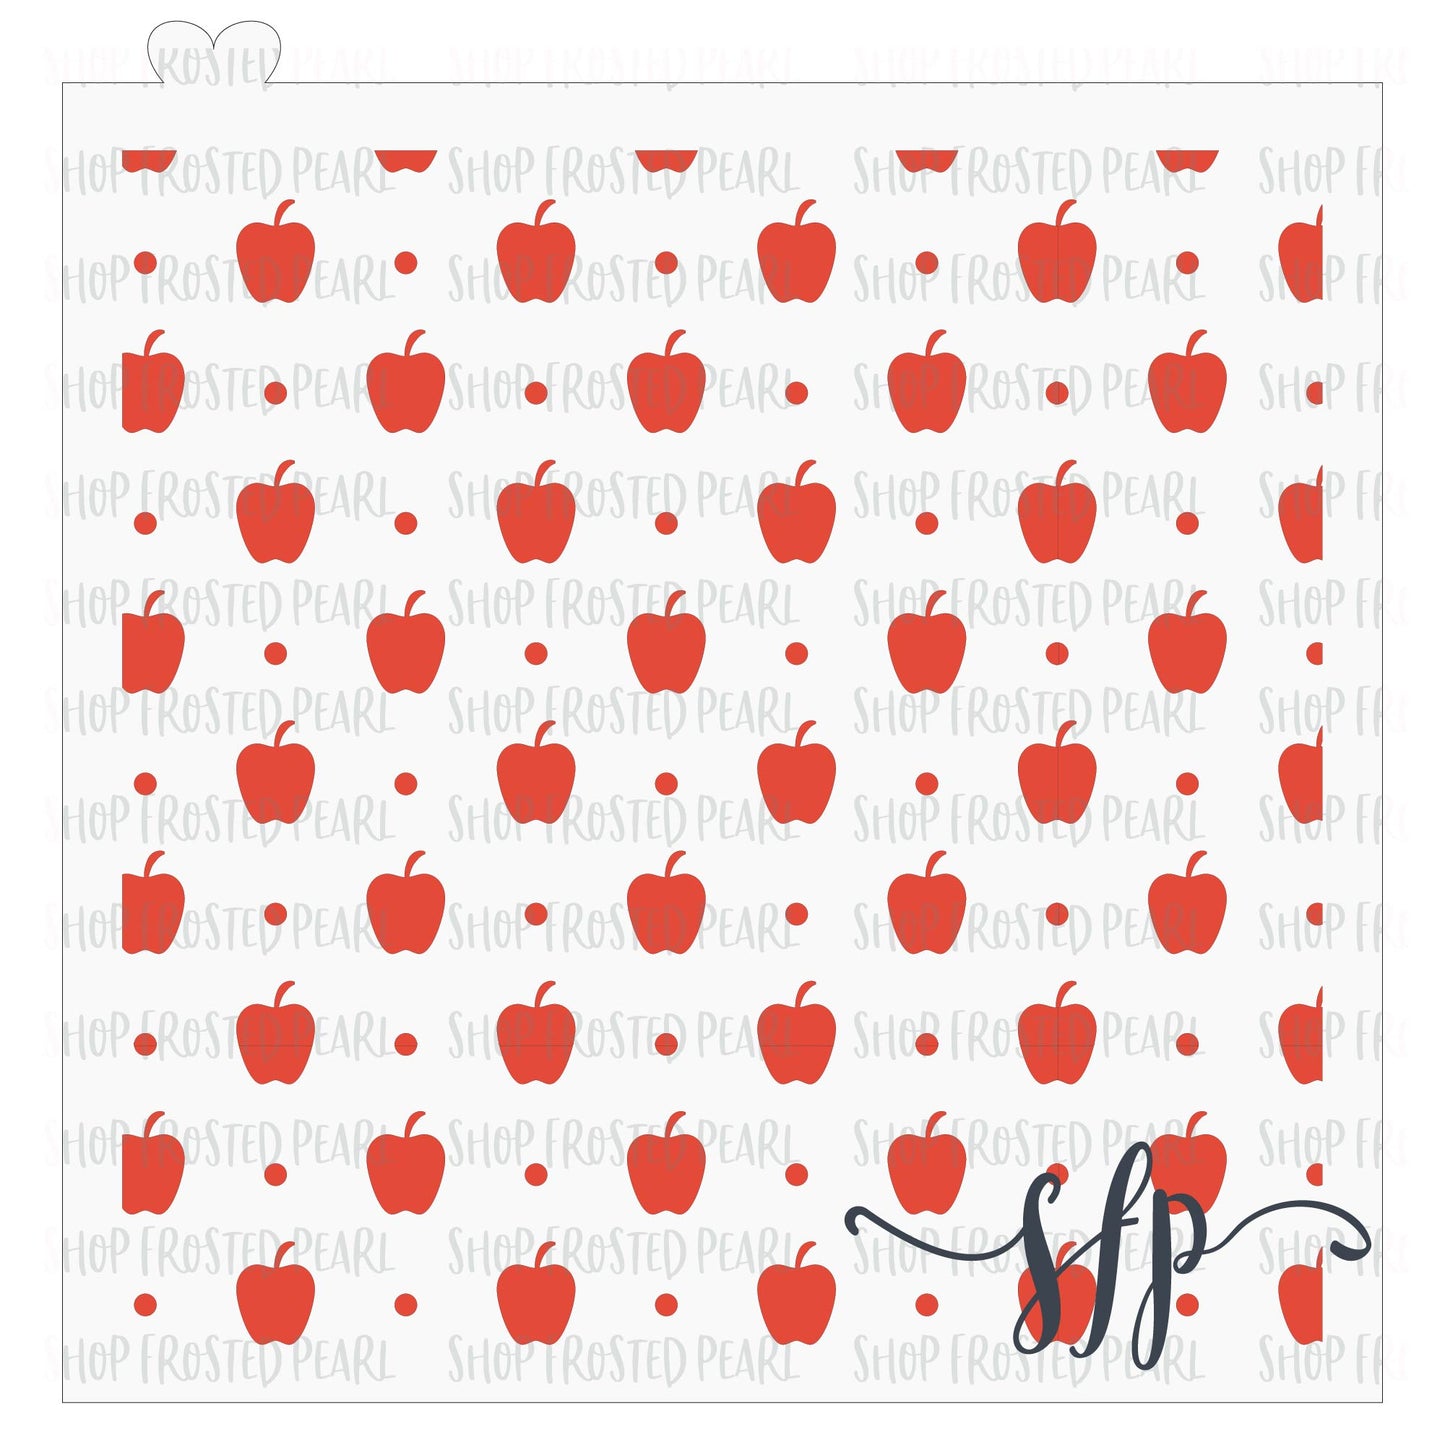 Apples - Stencil